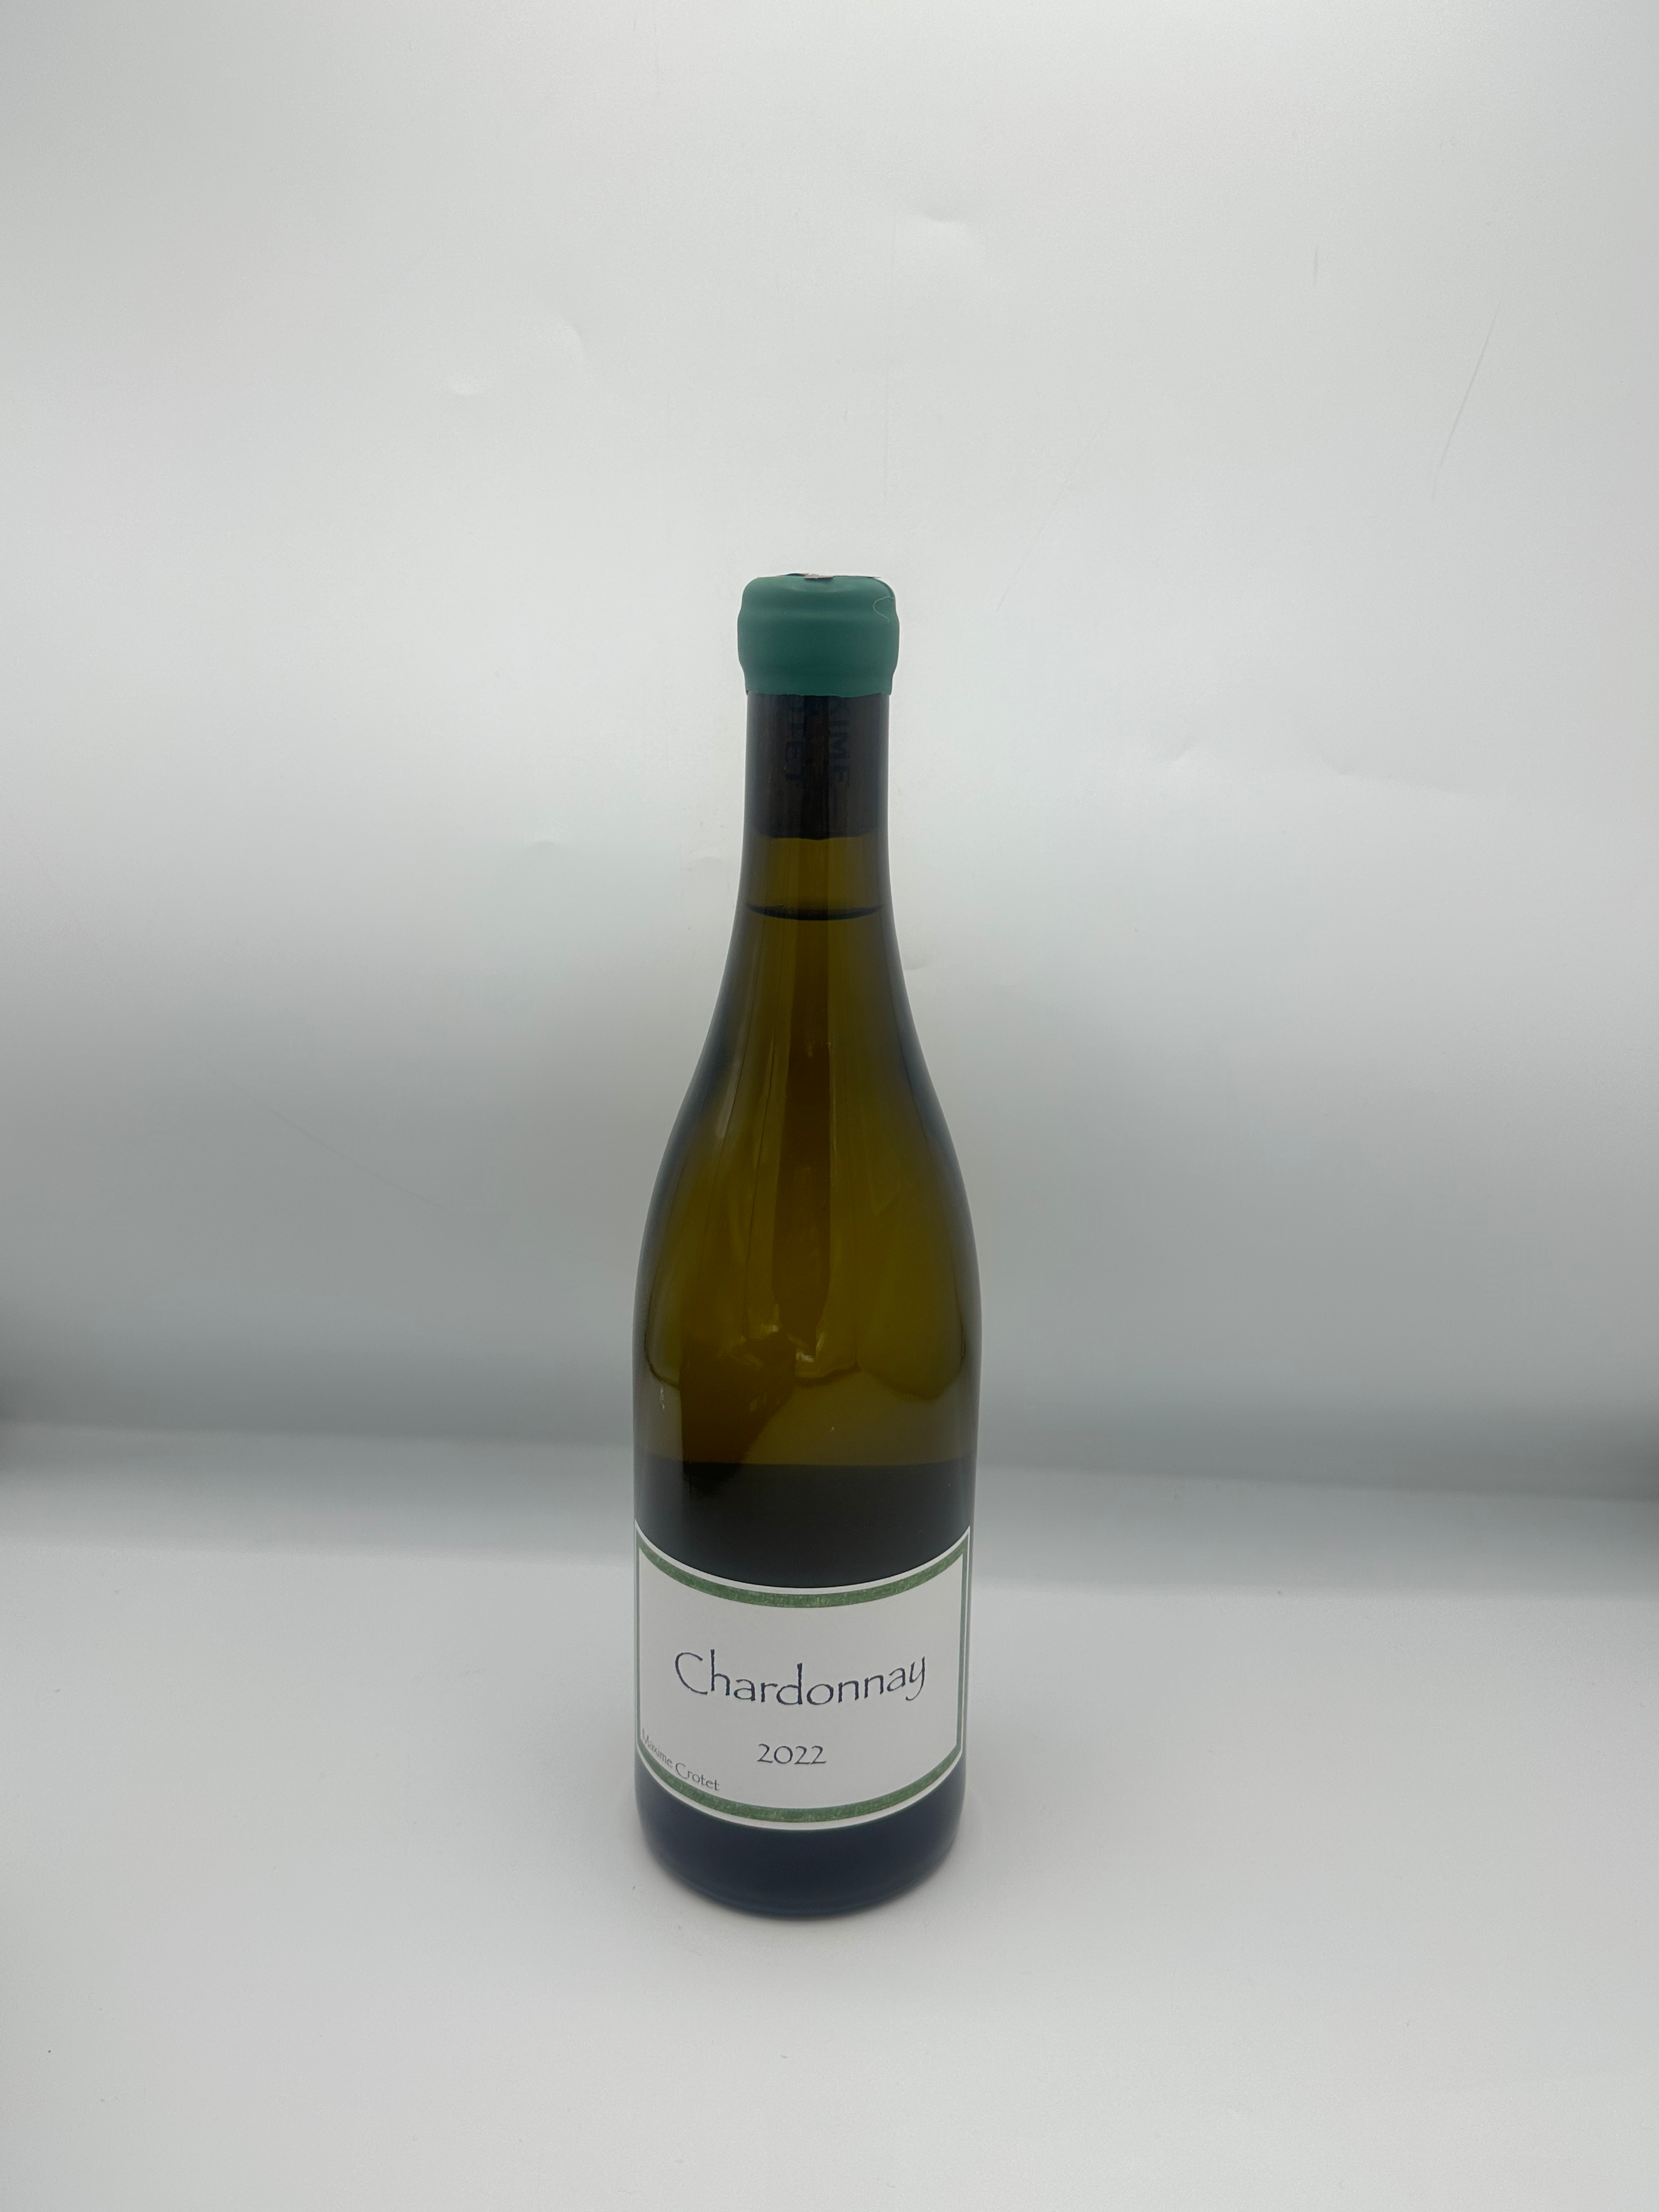 VDF "Chardonnay" 2022 Blanc - Maxime Crotet